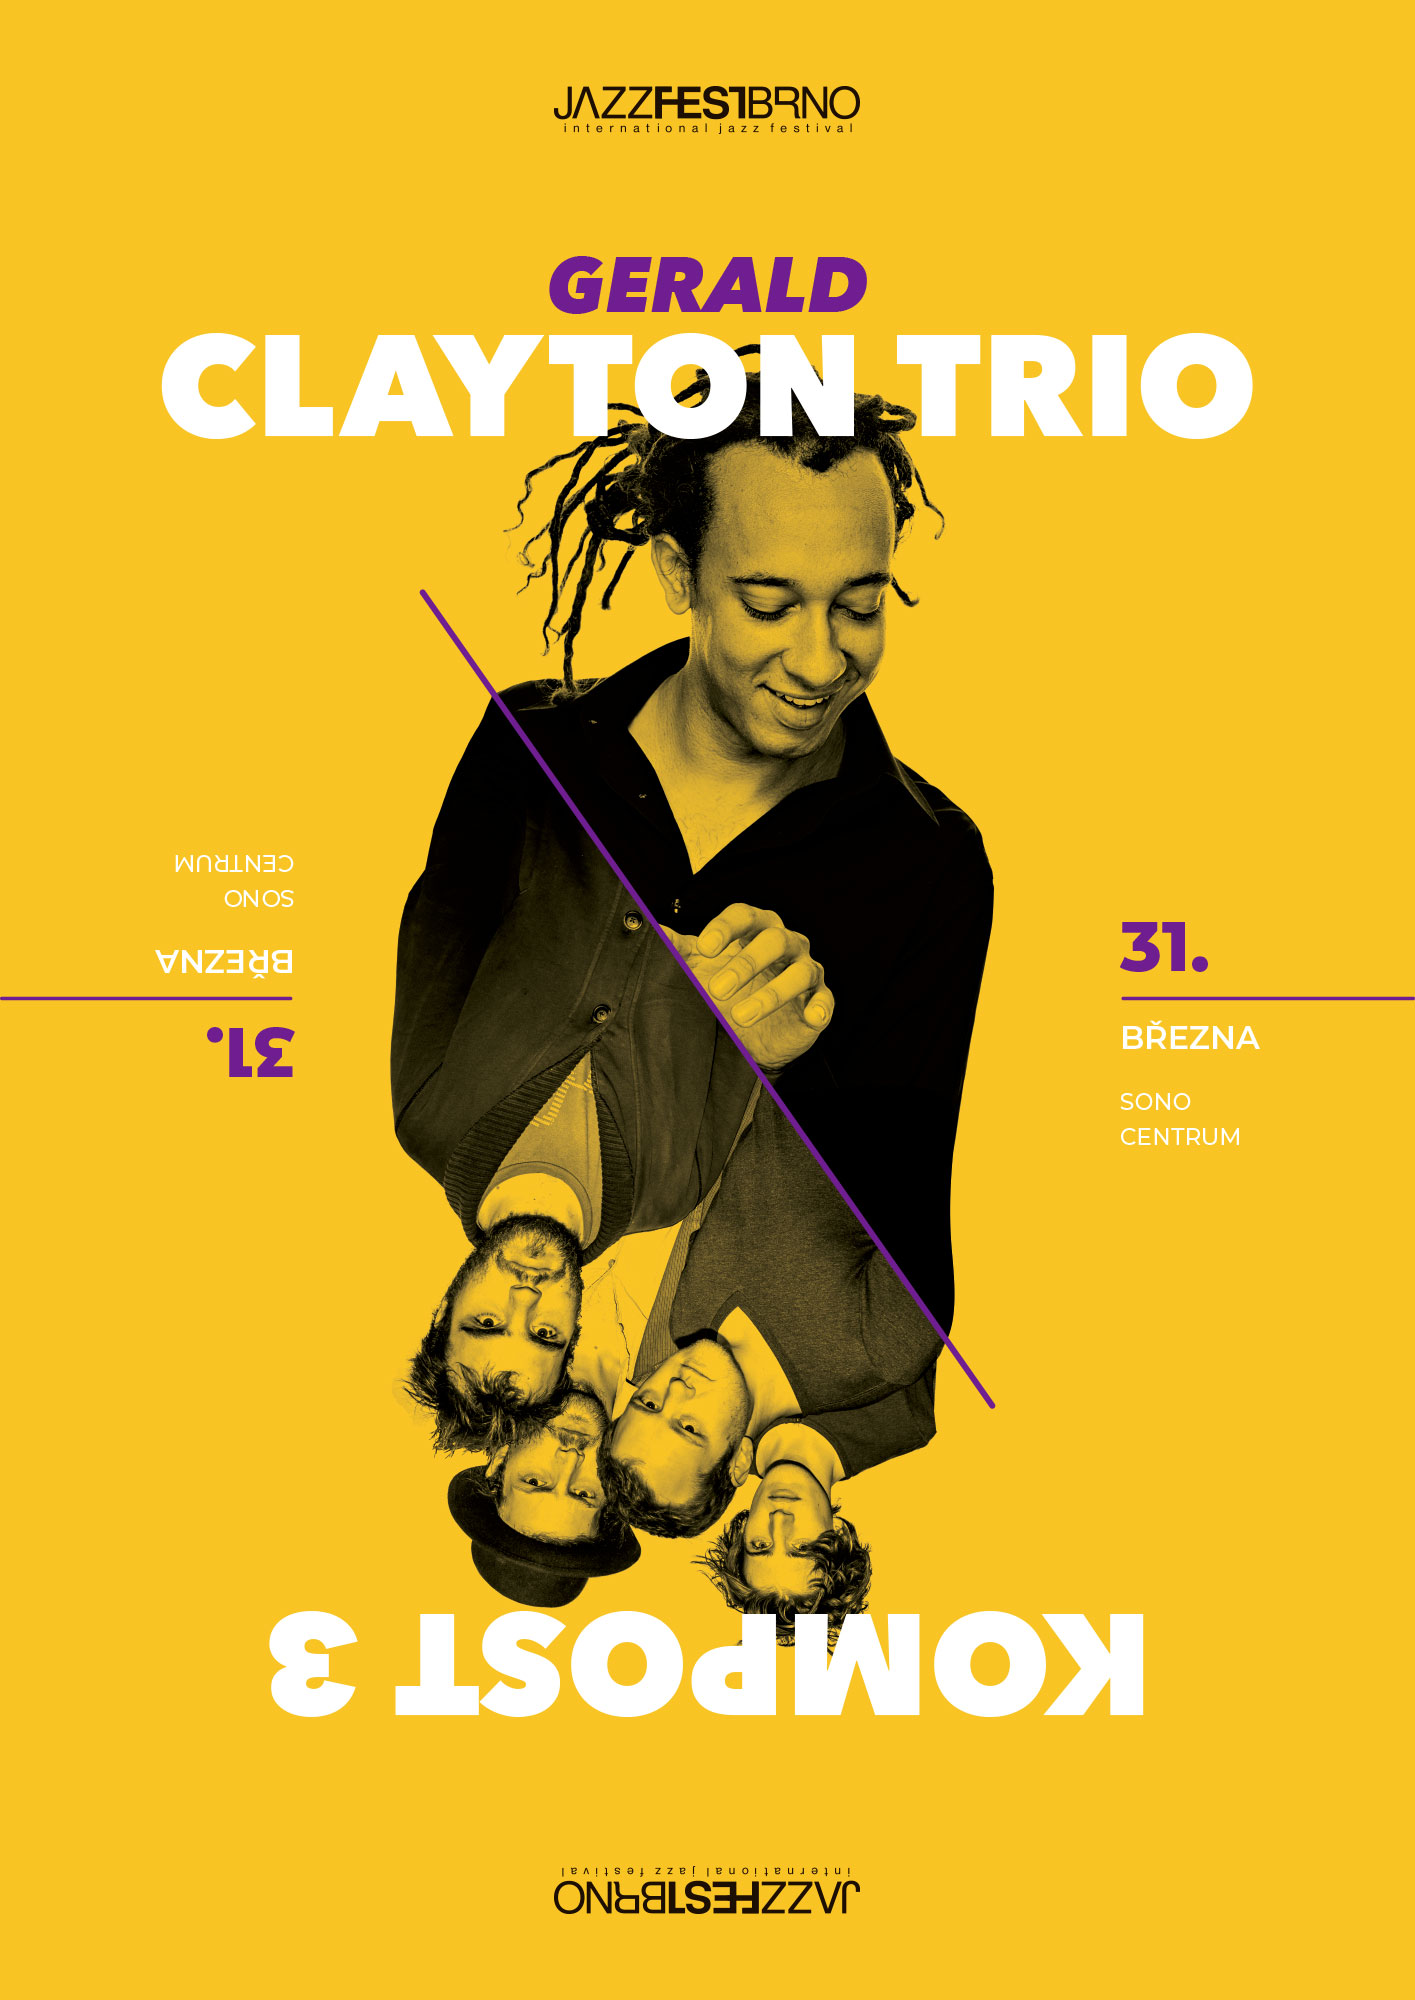 Jazzfestbrno 2015 - Gerald Clayton Trio & Kompost 3